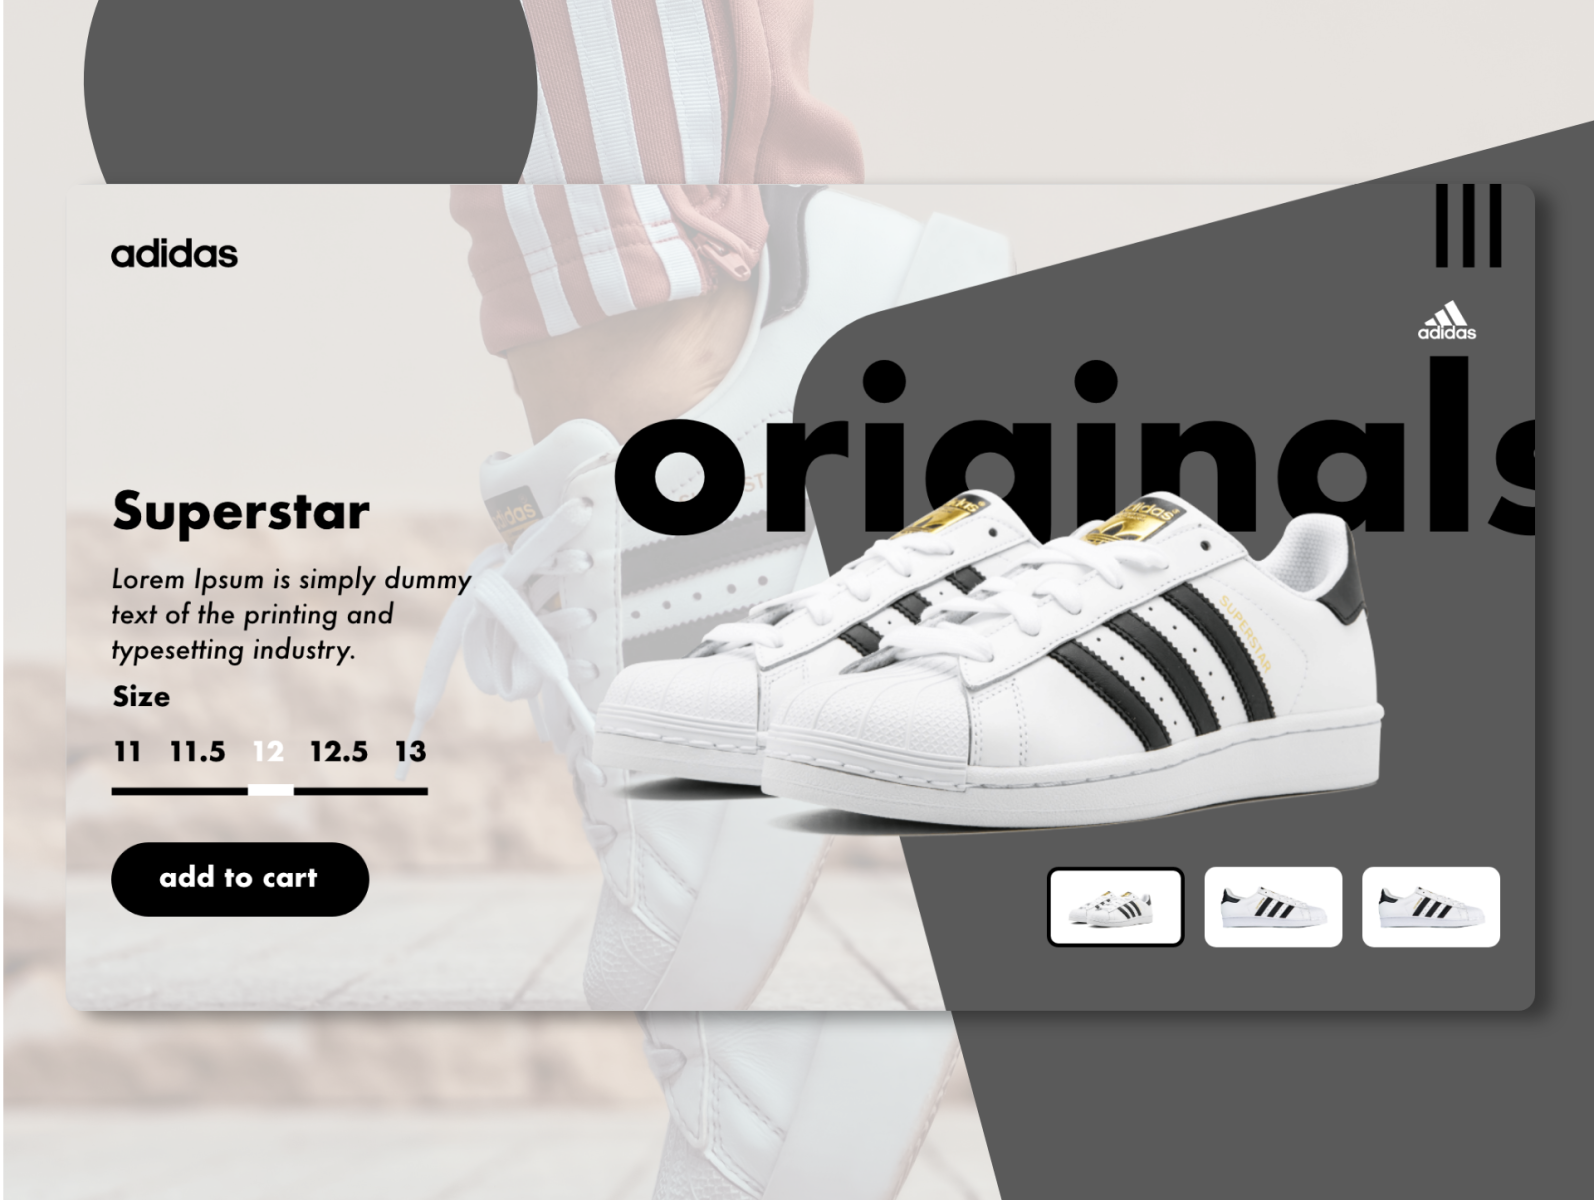 cabriolet Distribuere Diskret Adidas Originals Superstar online shop, e-commerce-concept by ixsights on  Dribbble